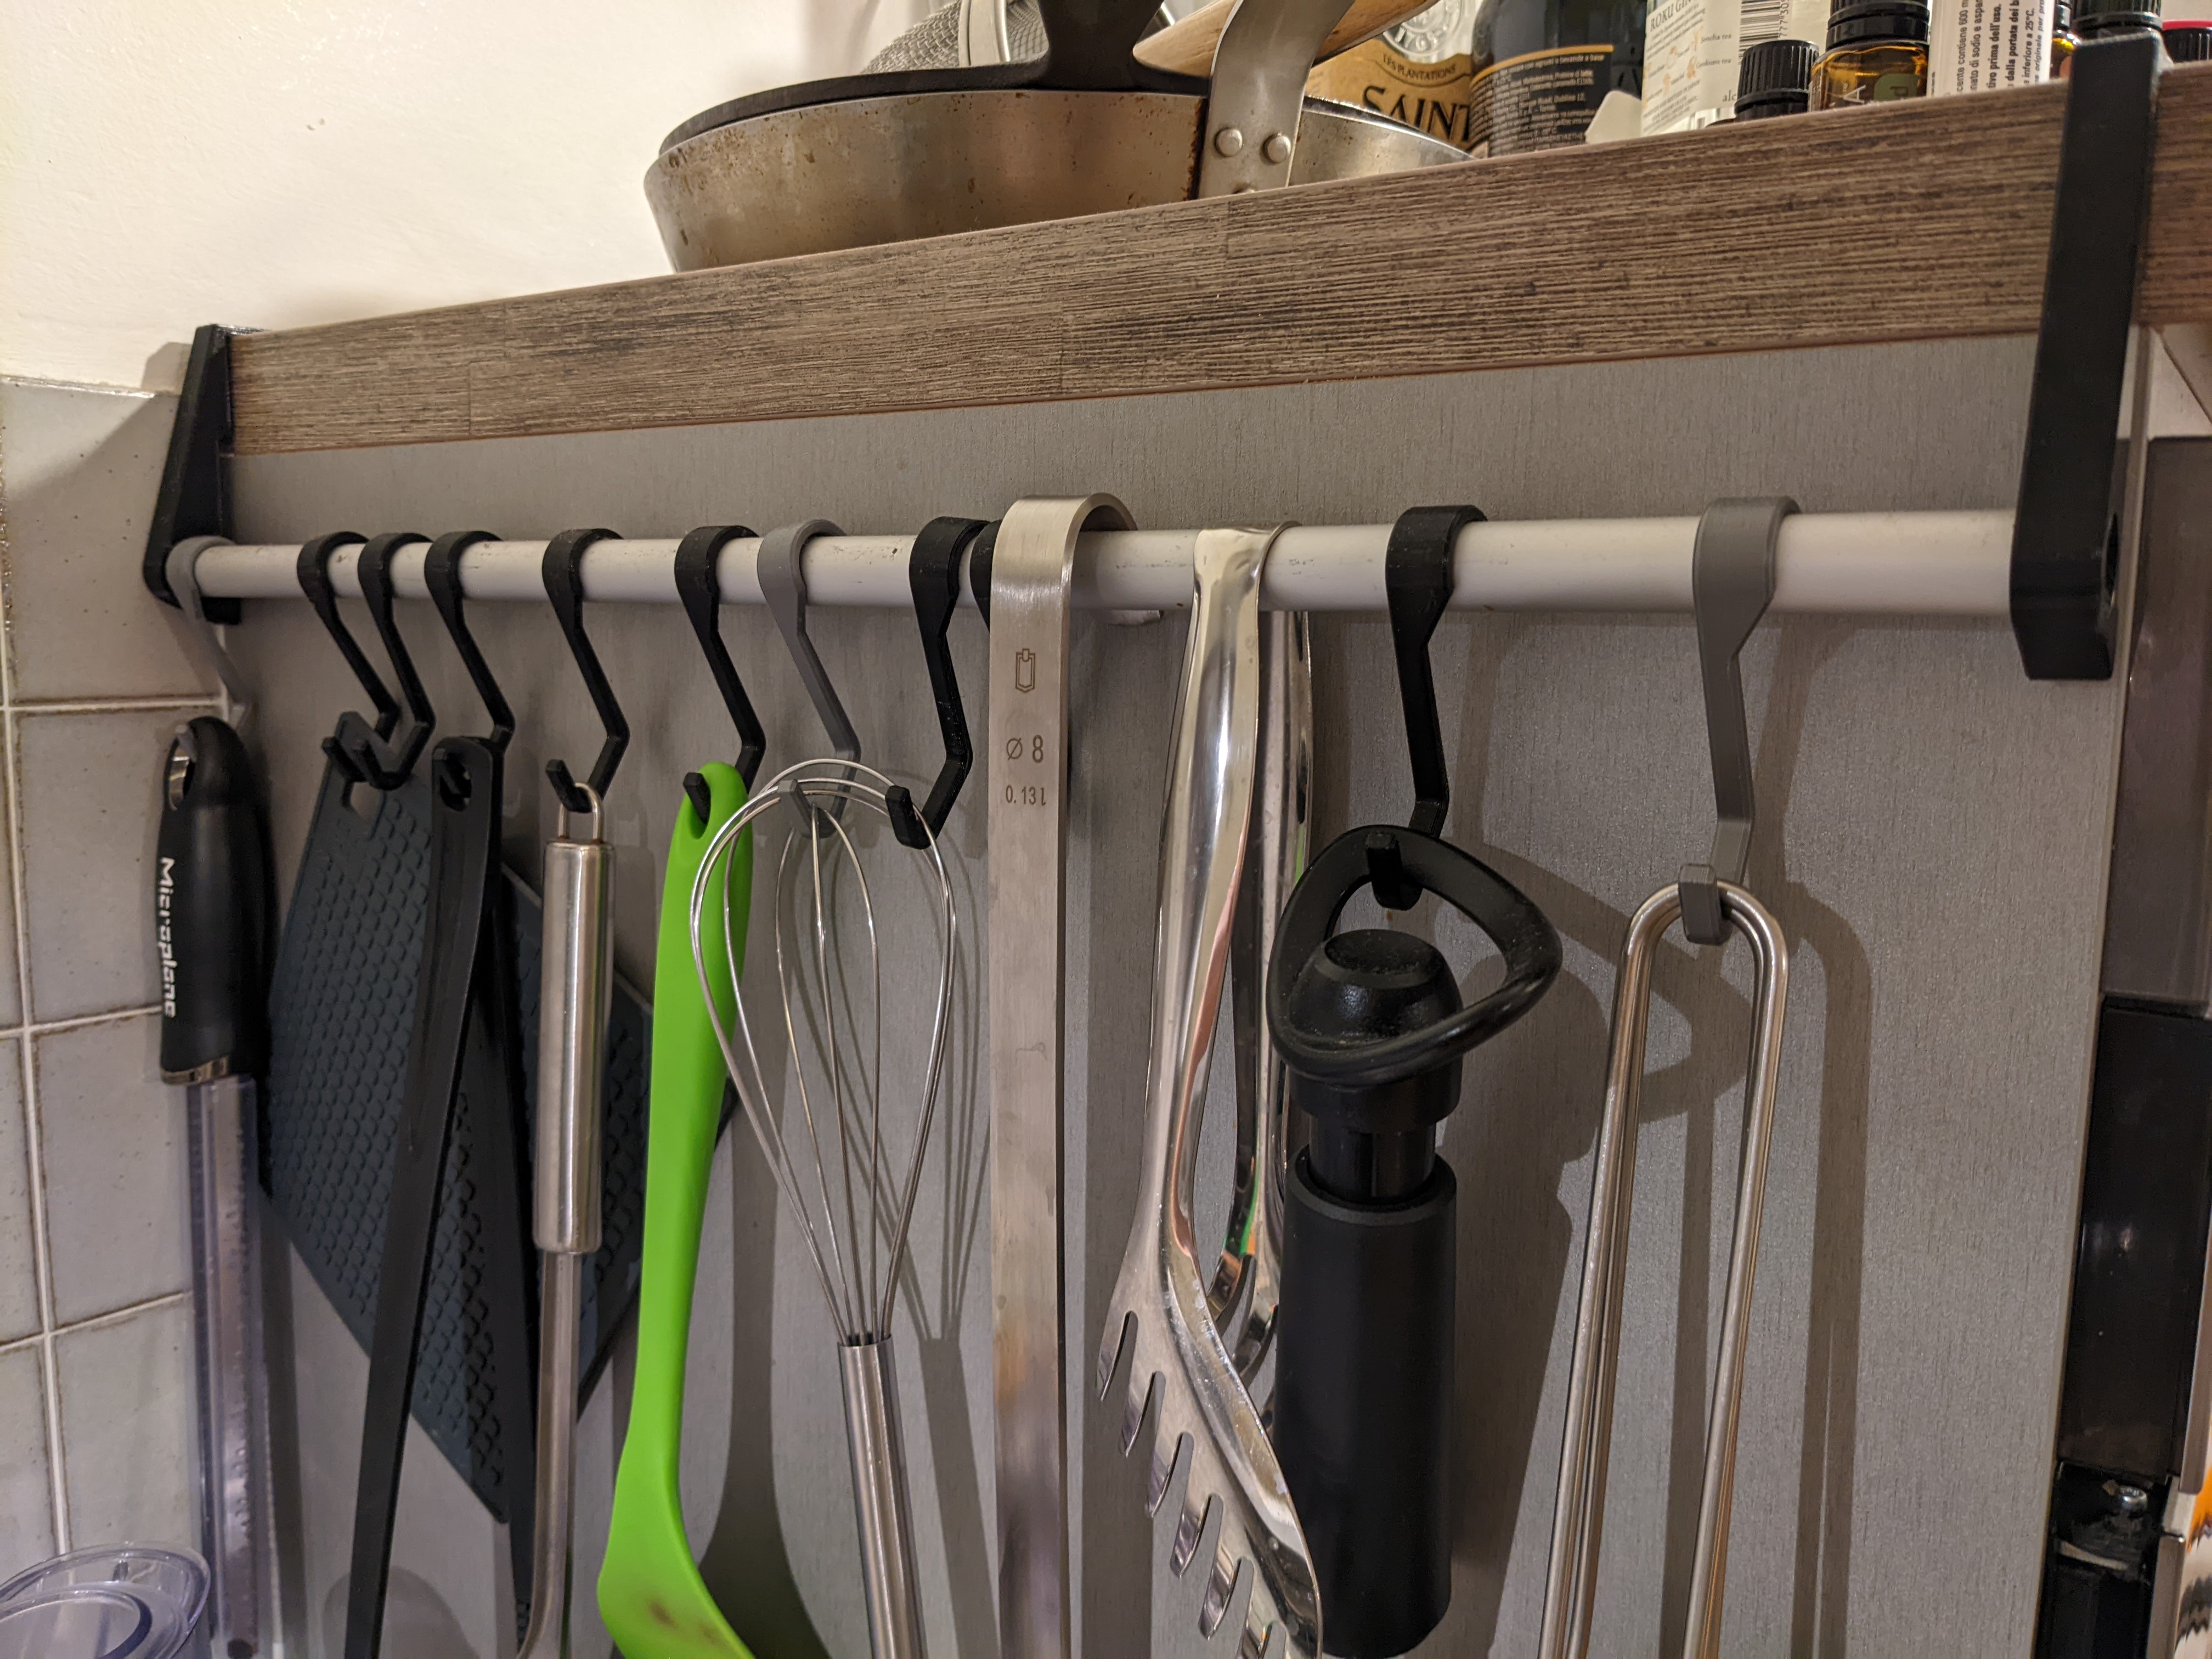 Kitchen tools organizer with hooks